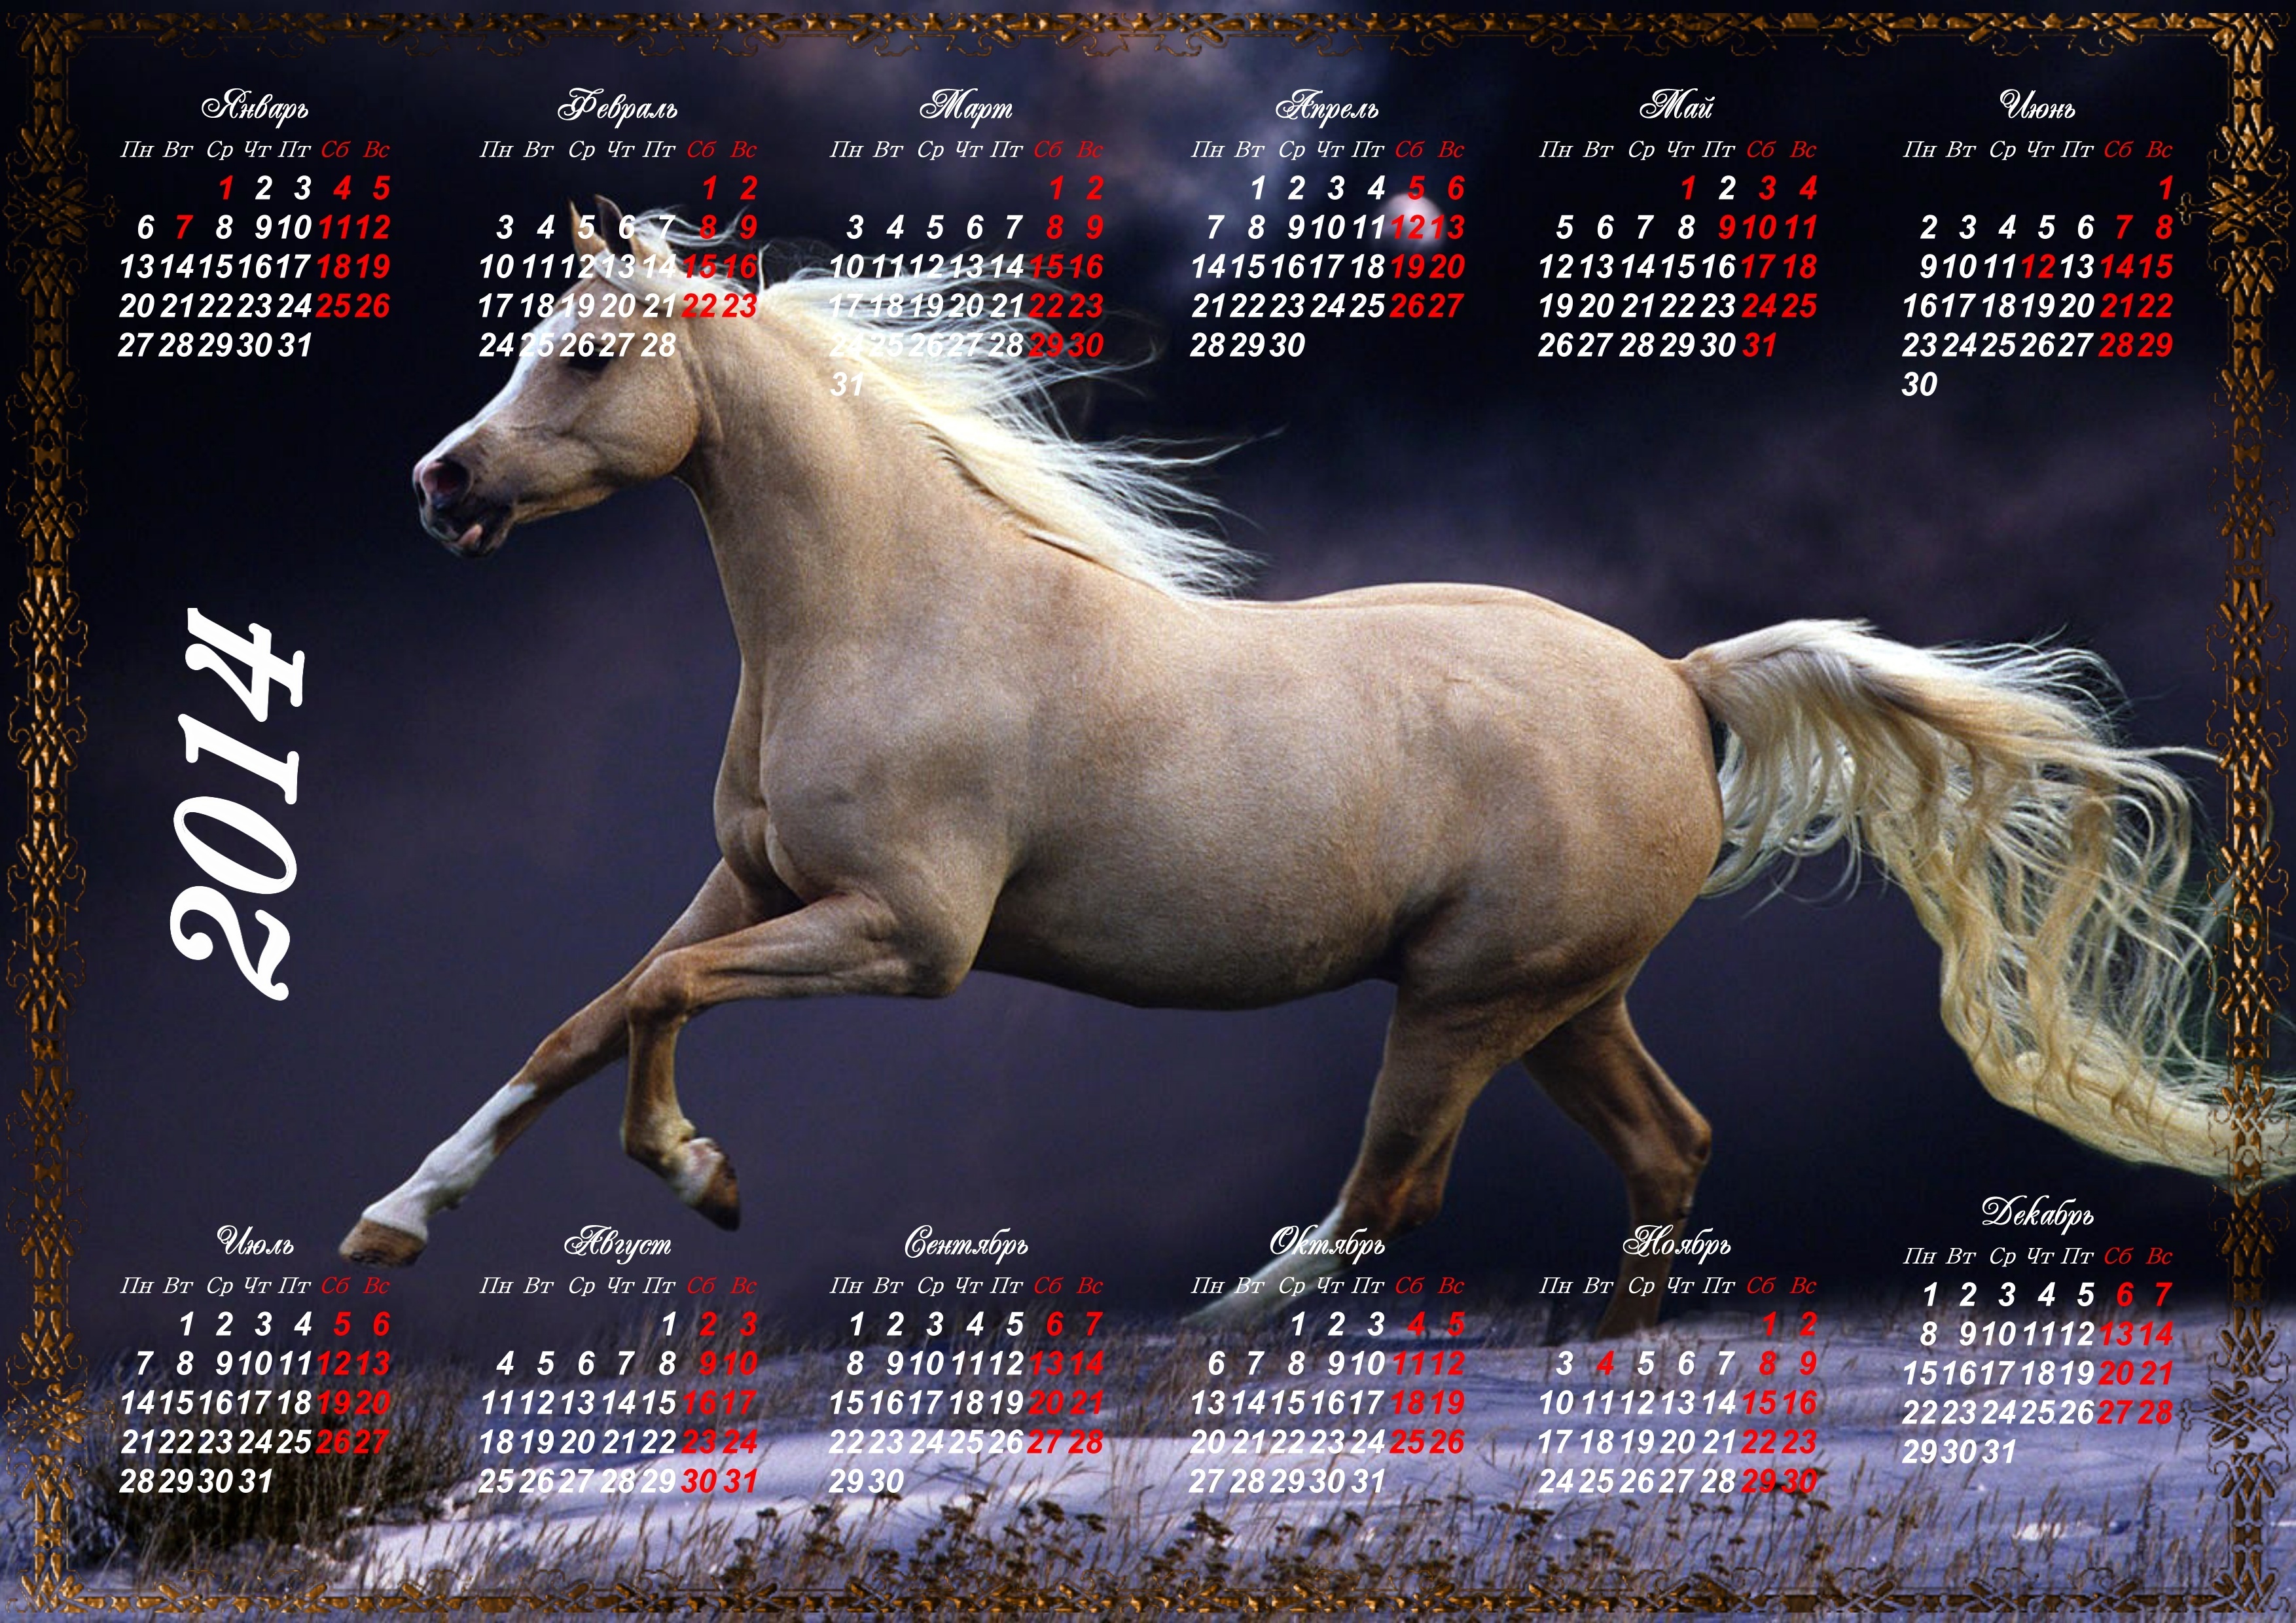 2014 год какого цвета. Календарь 2014 год лошади. Лошадь 2014. Год лошади 2014. Год лошади календарь.